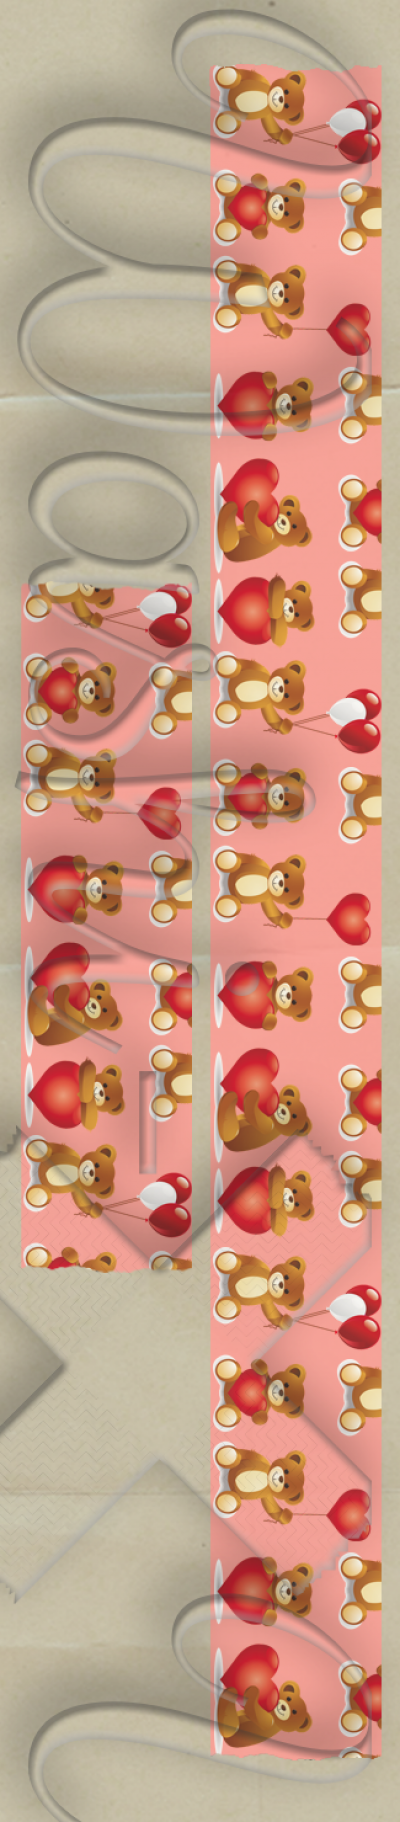 Teddy bear patterned washi tape